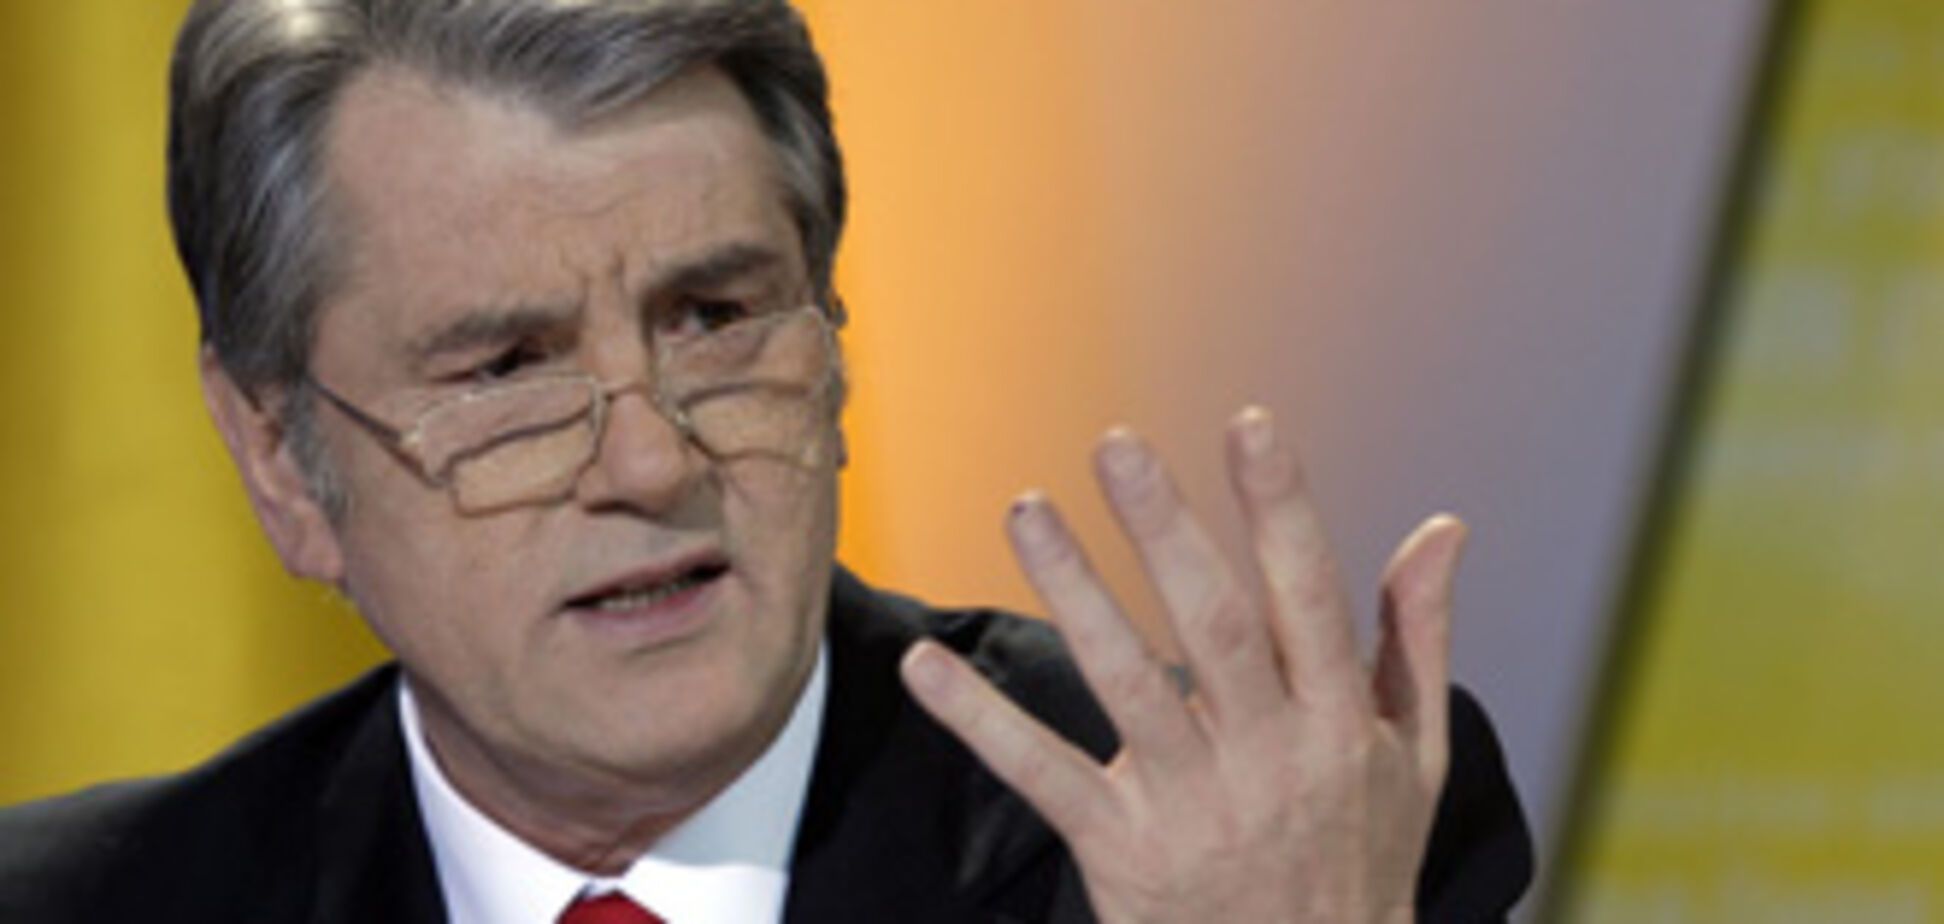 Тигипко: На столе у Ющенко всегда был бардак